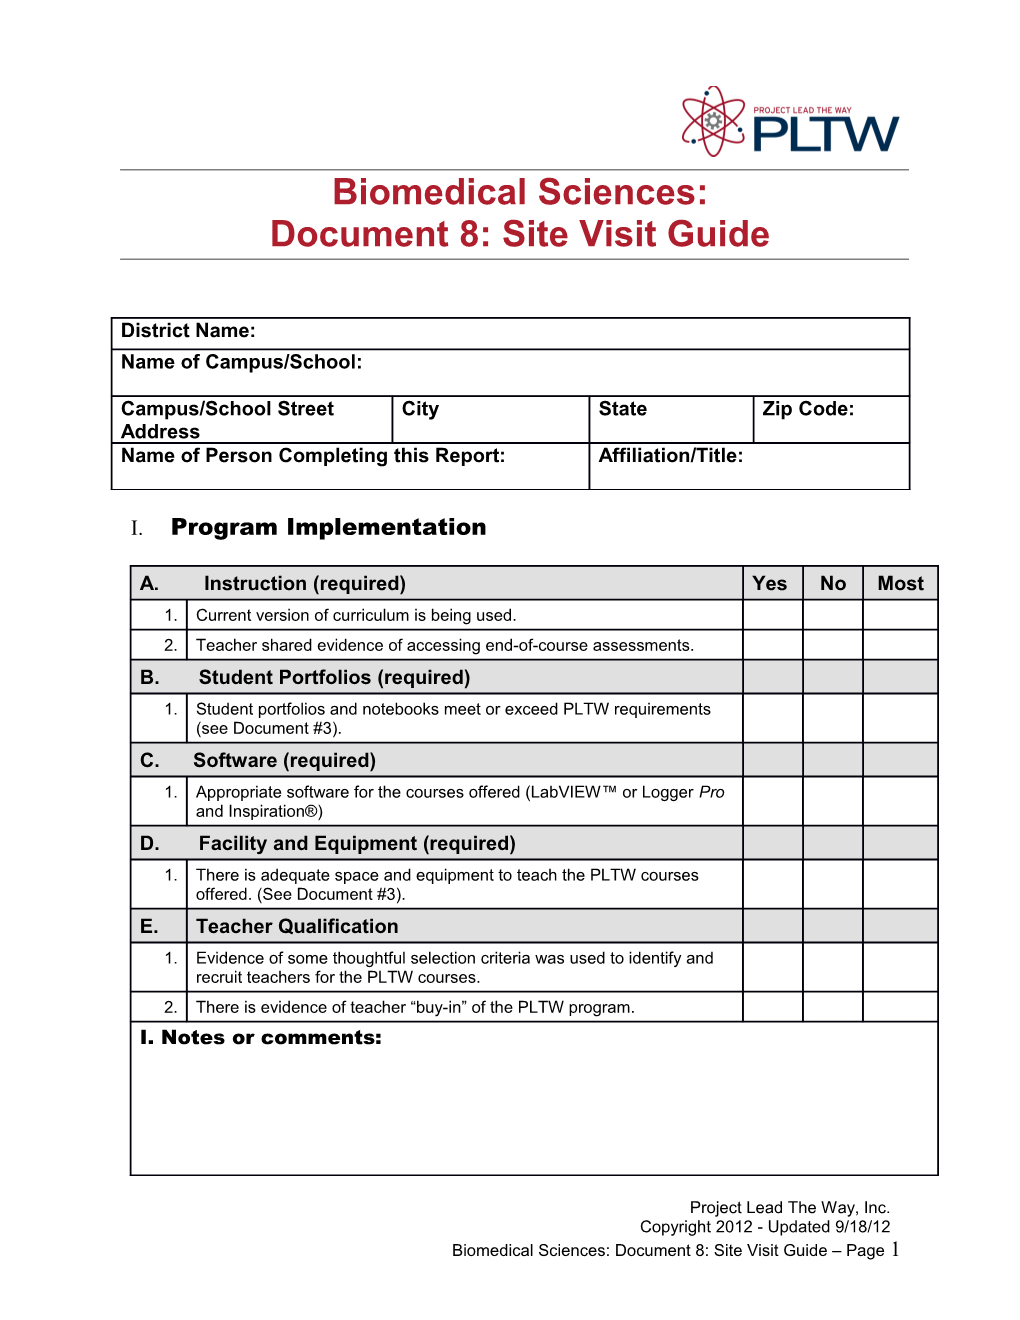 Biomedical Science Site Visit Guide